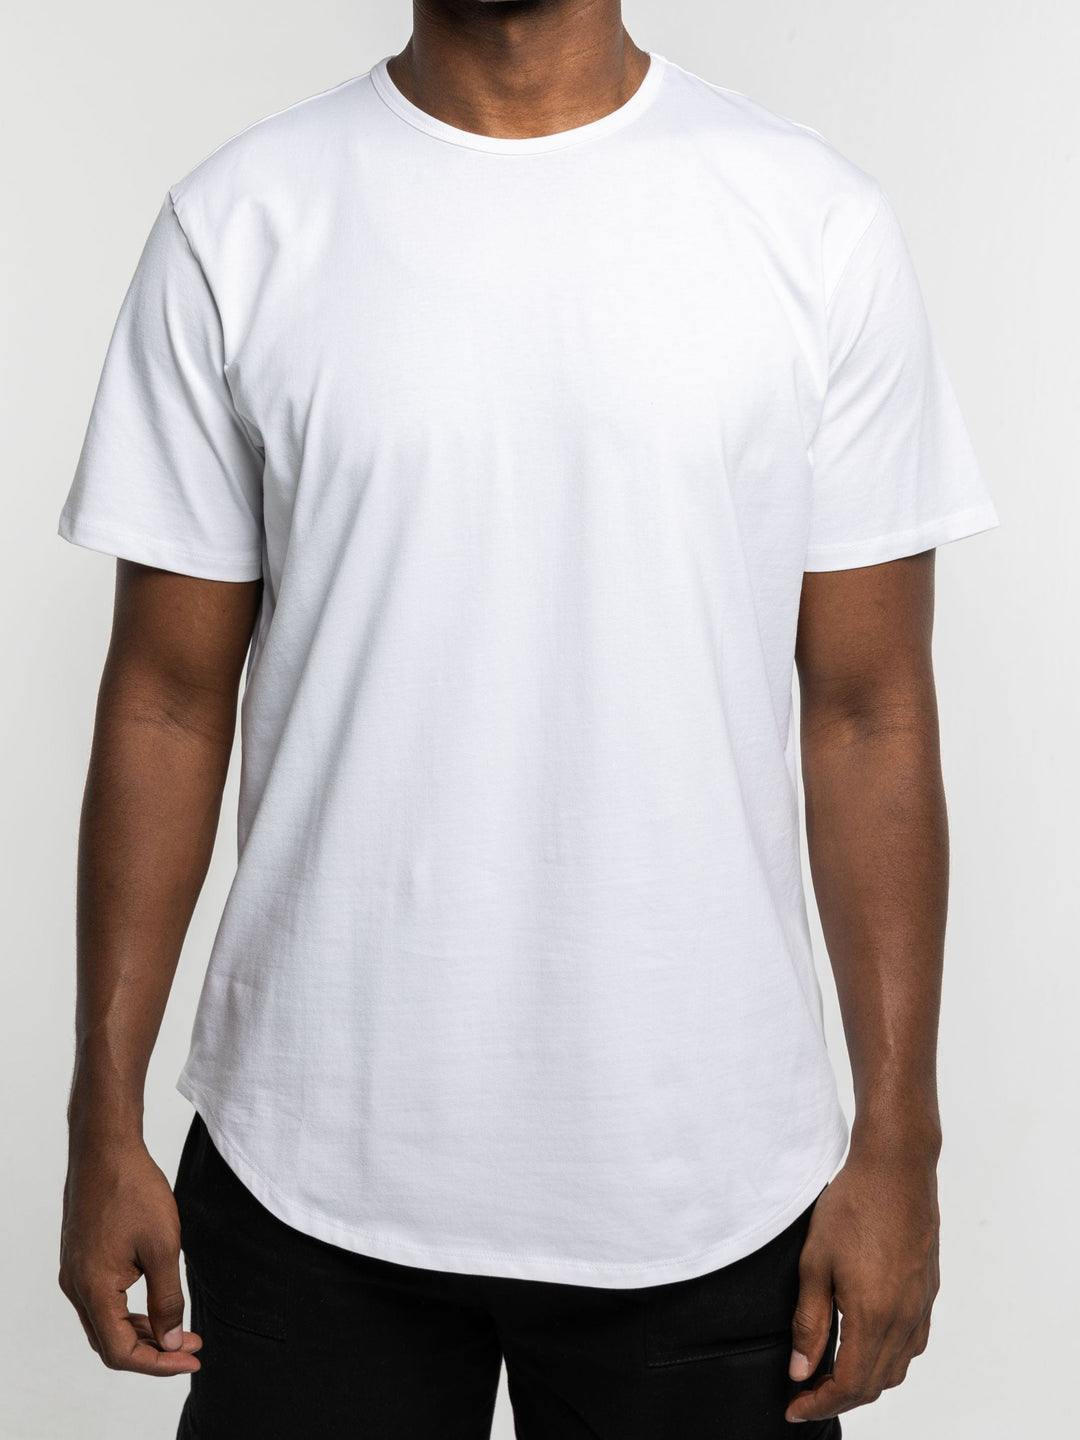 White Curved Hem T-Shirt: SLS Comfort – Zhivago